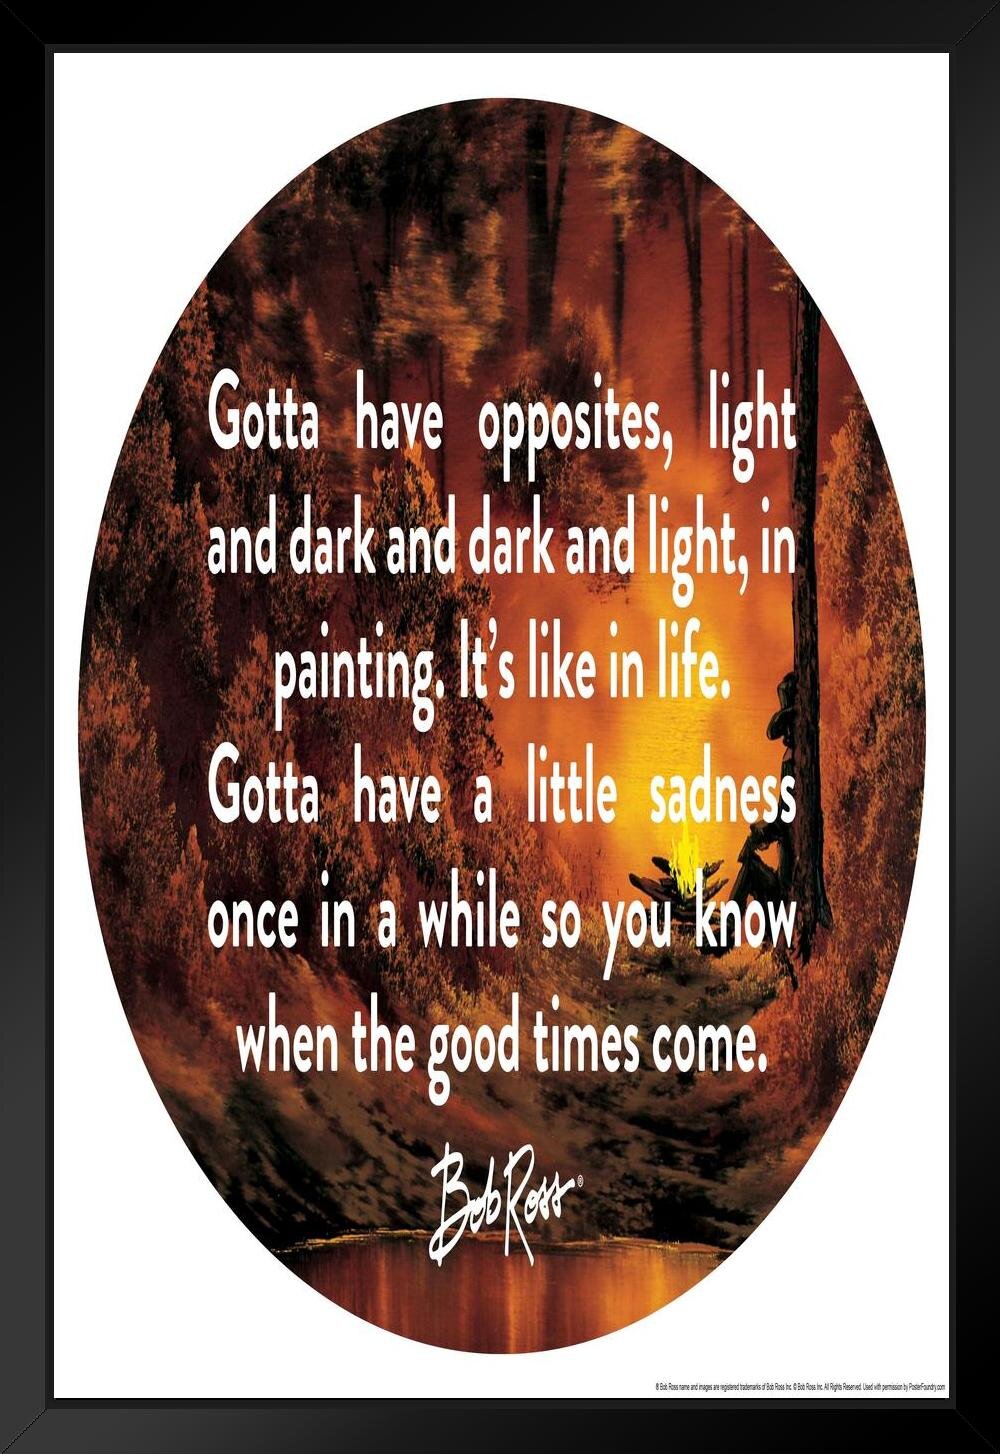 I Am Light Inspirational Quote Print